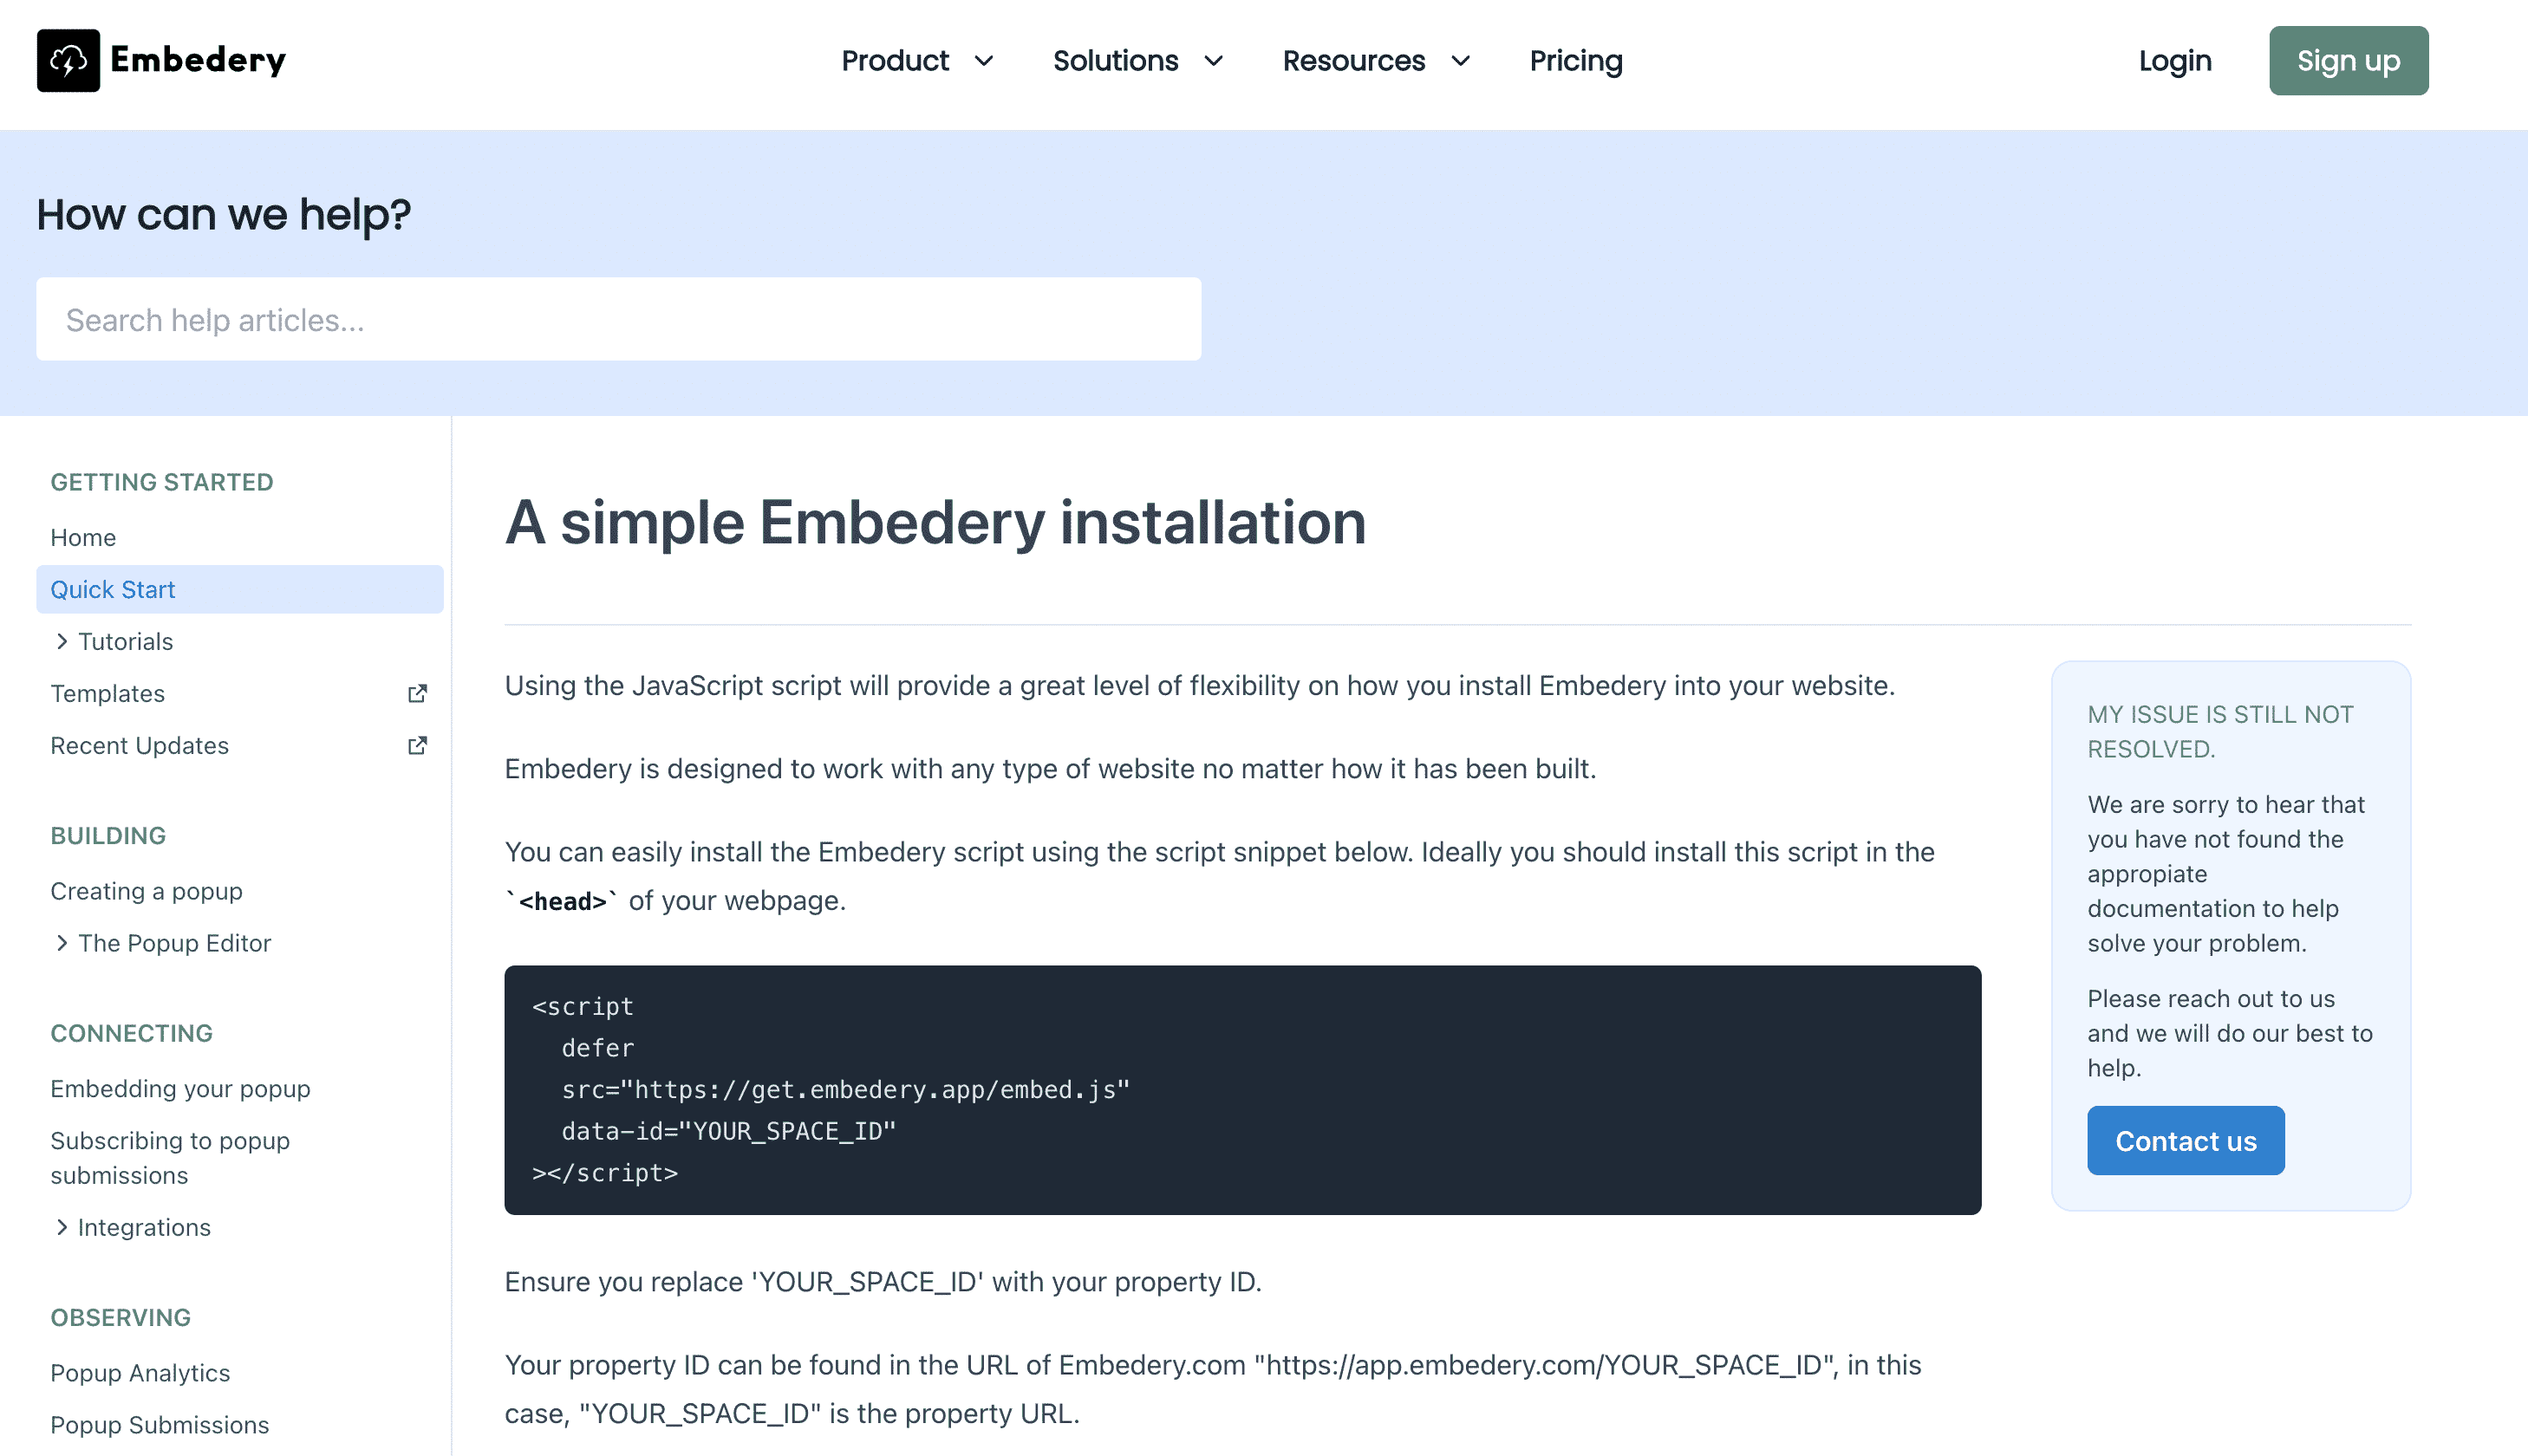 Embedery documentation website